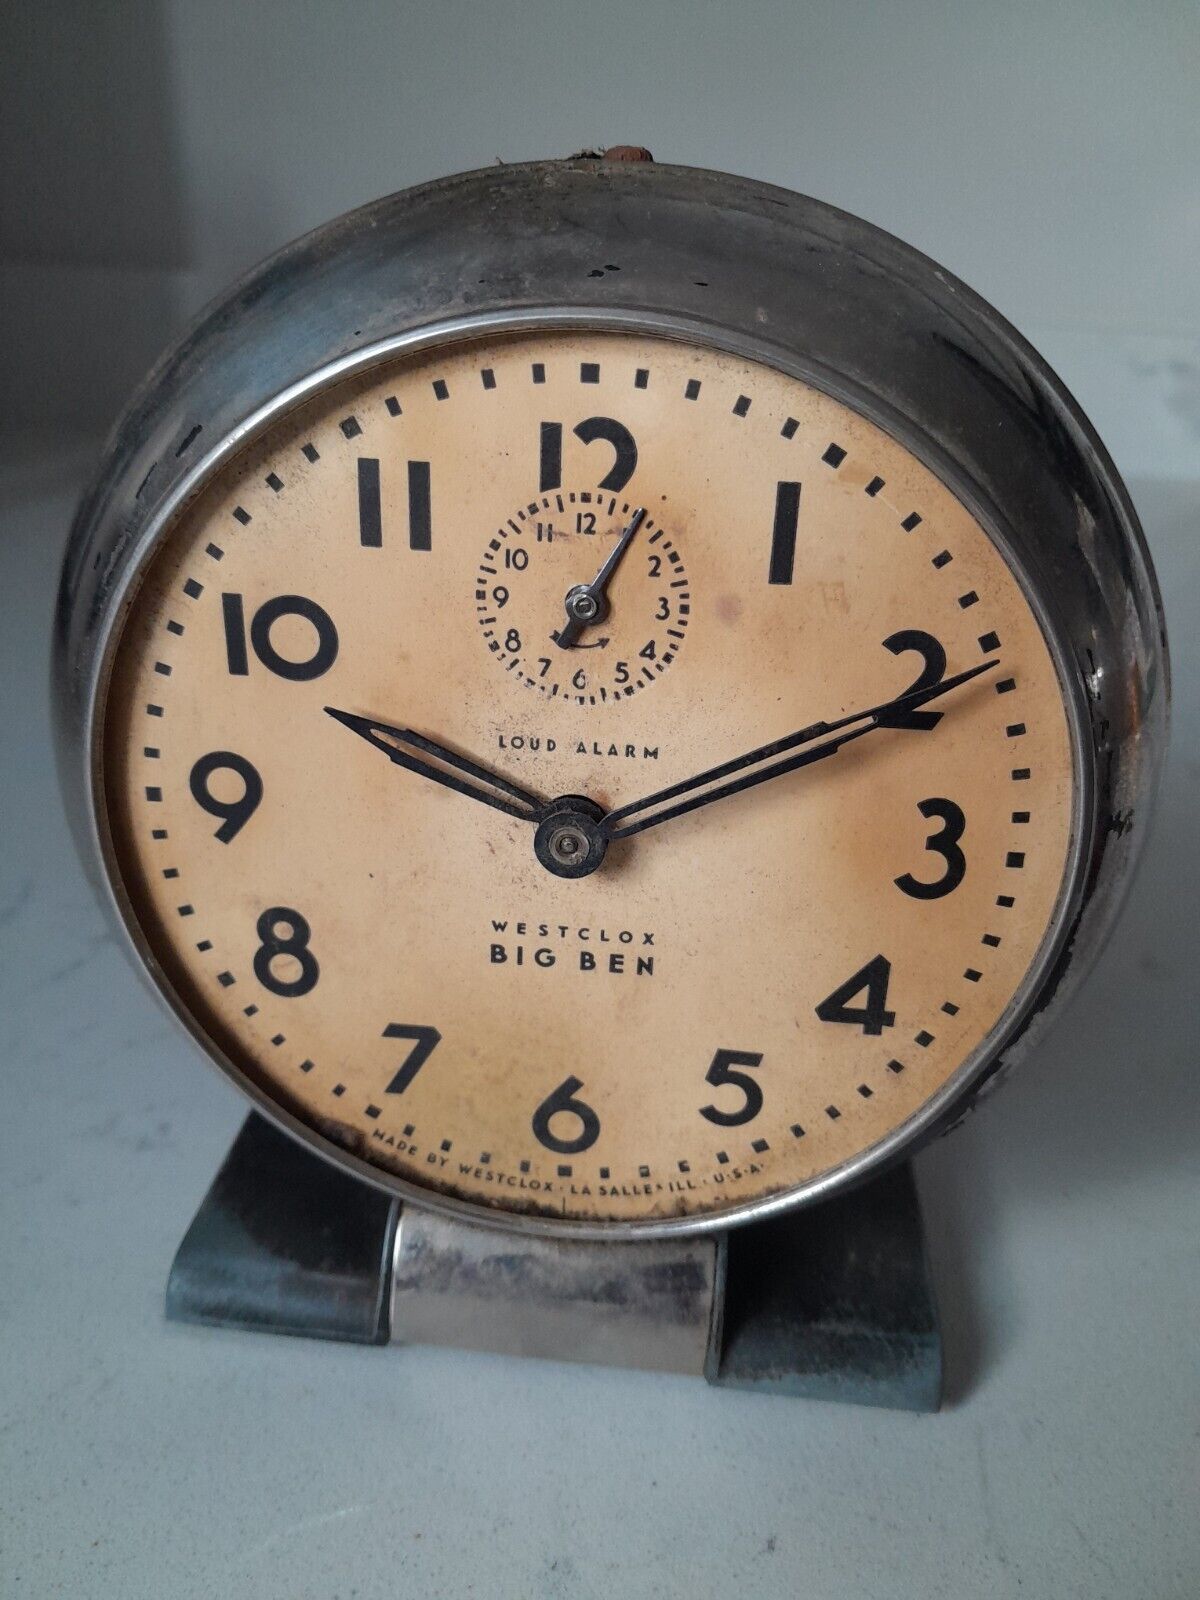 Vintage 1930s Large Metal Westclox Big Ben Alarm Clock For Parts/Repair